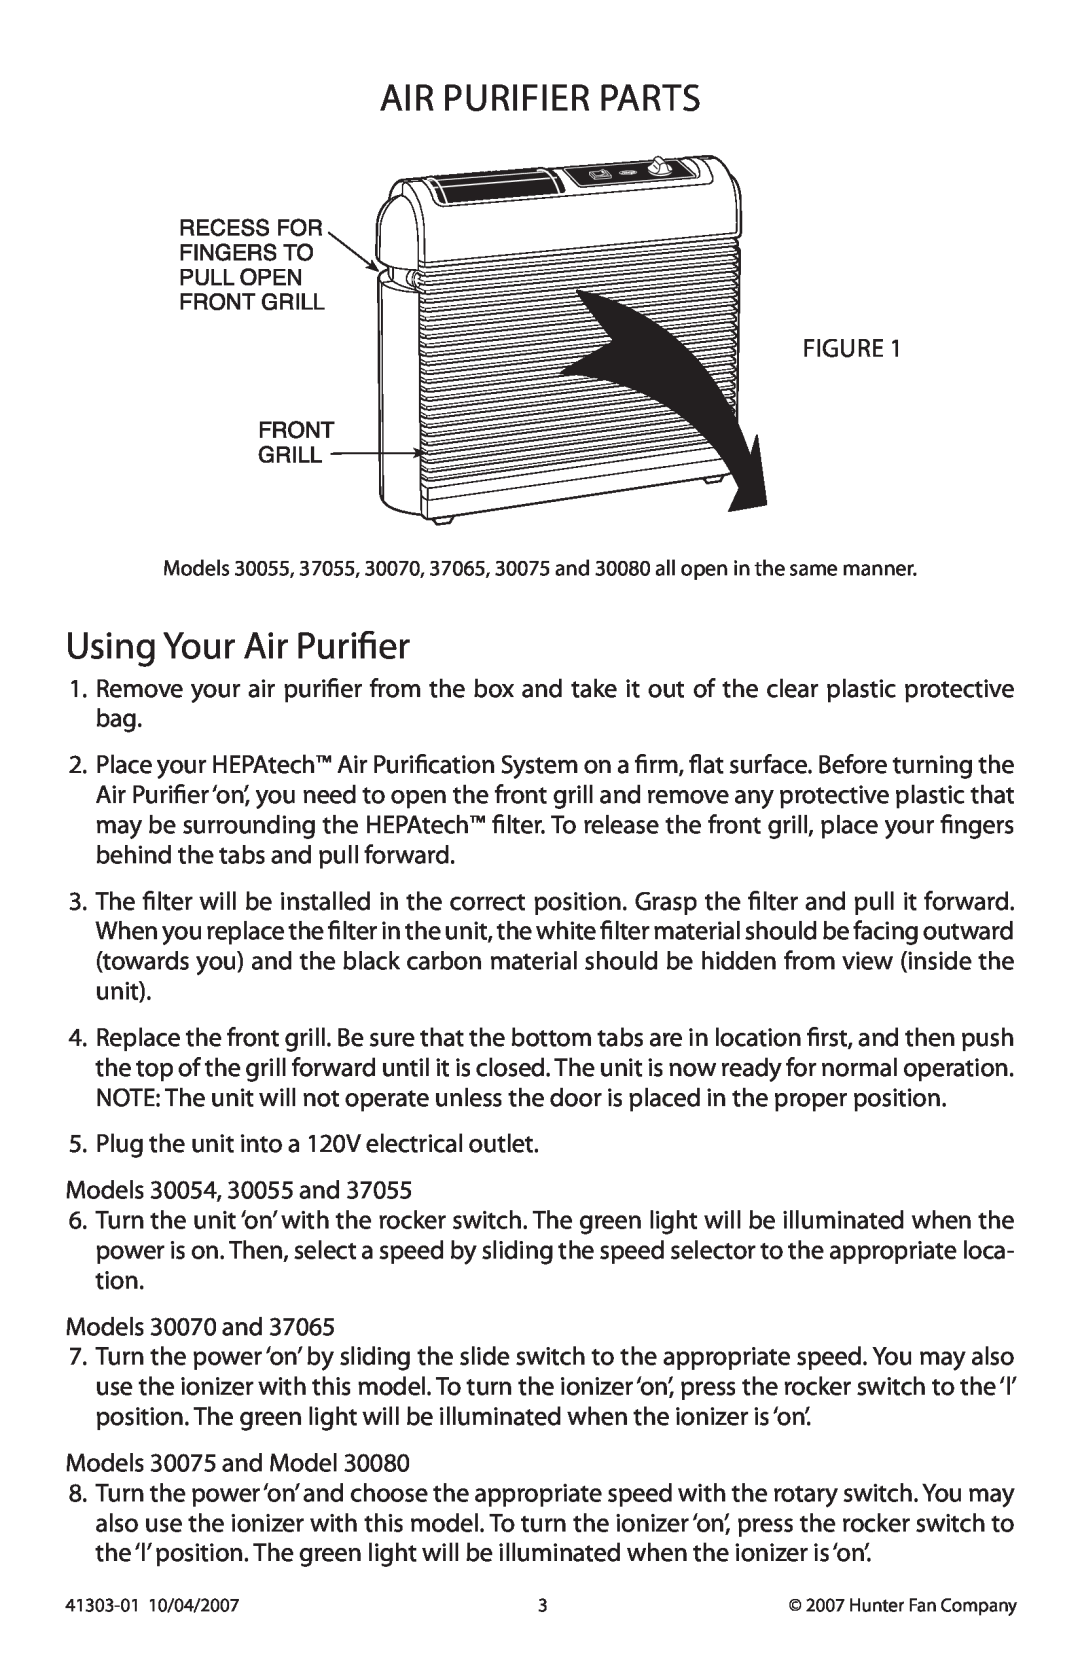 Hunter Fan 30075, 37065, 37055, 30080, 30070, 30054 manual Air Purifier Parts, Using Your Air Purifier 